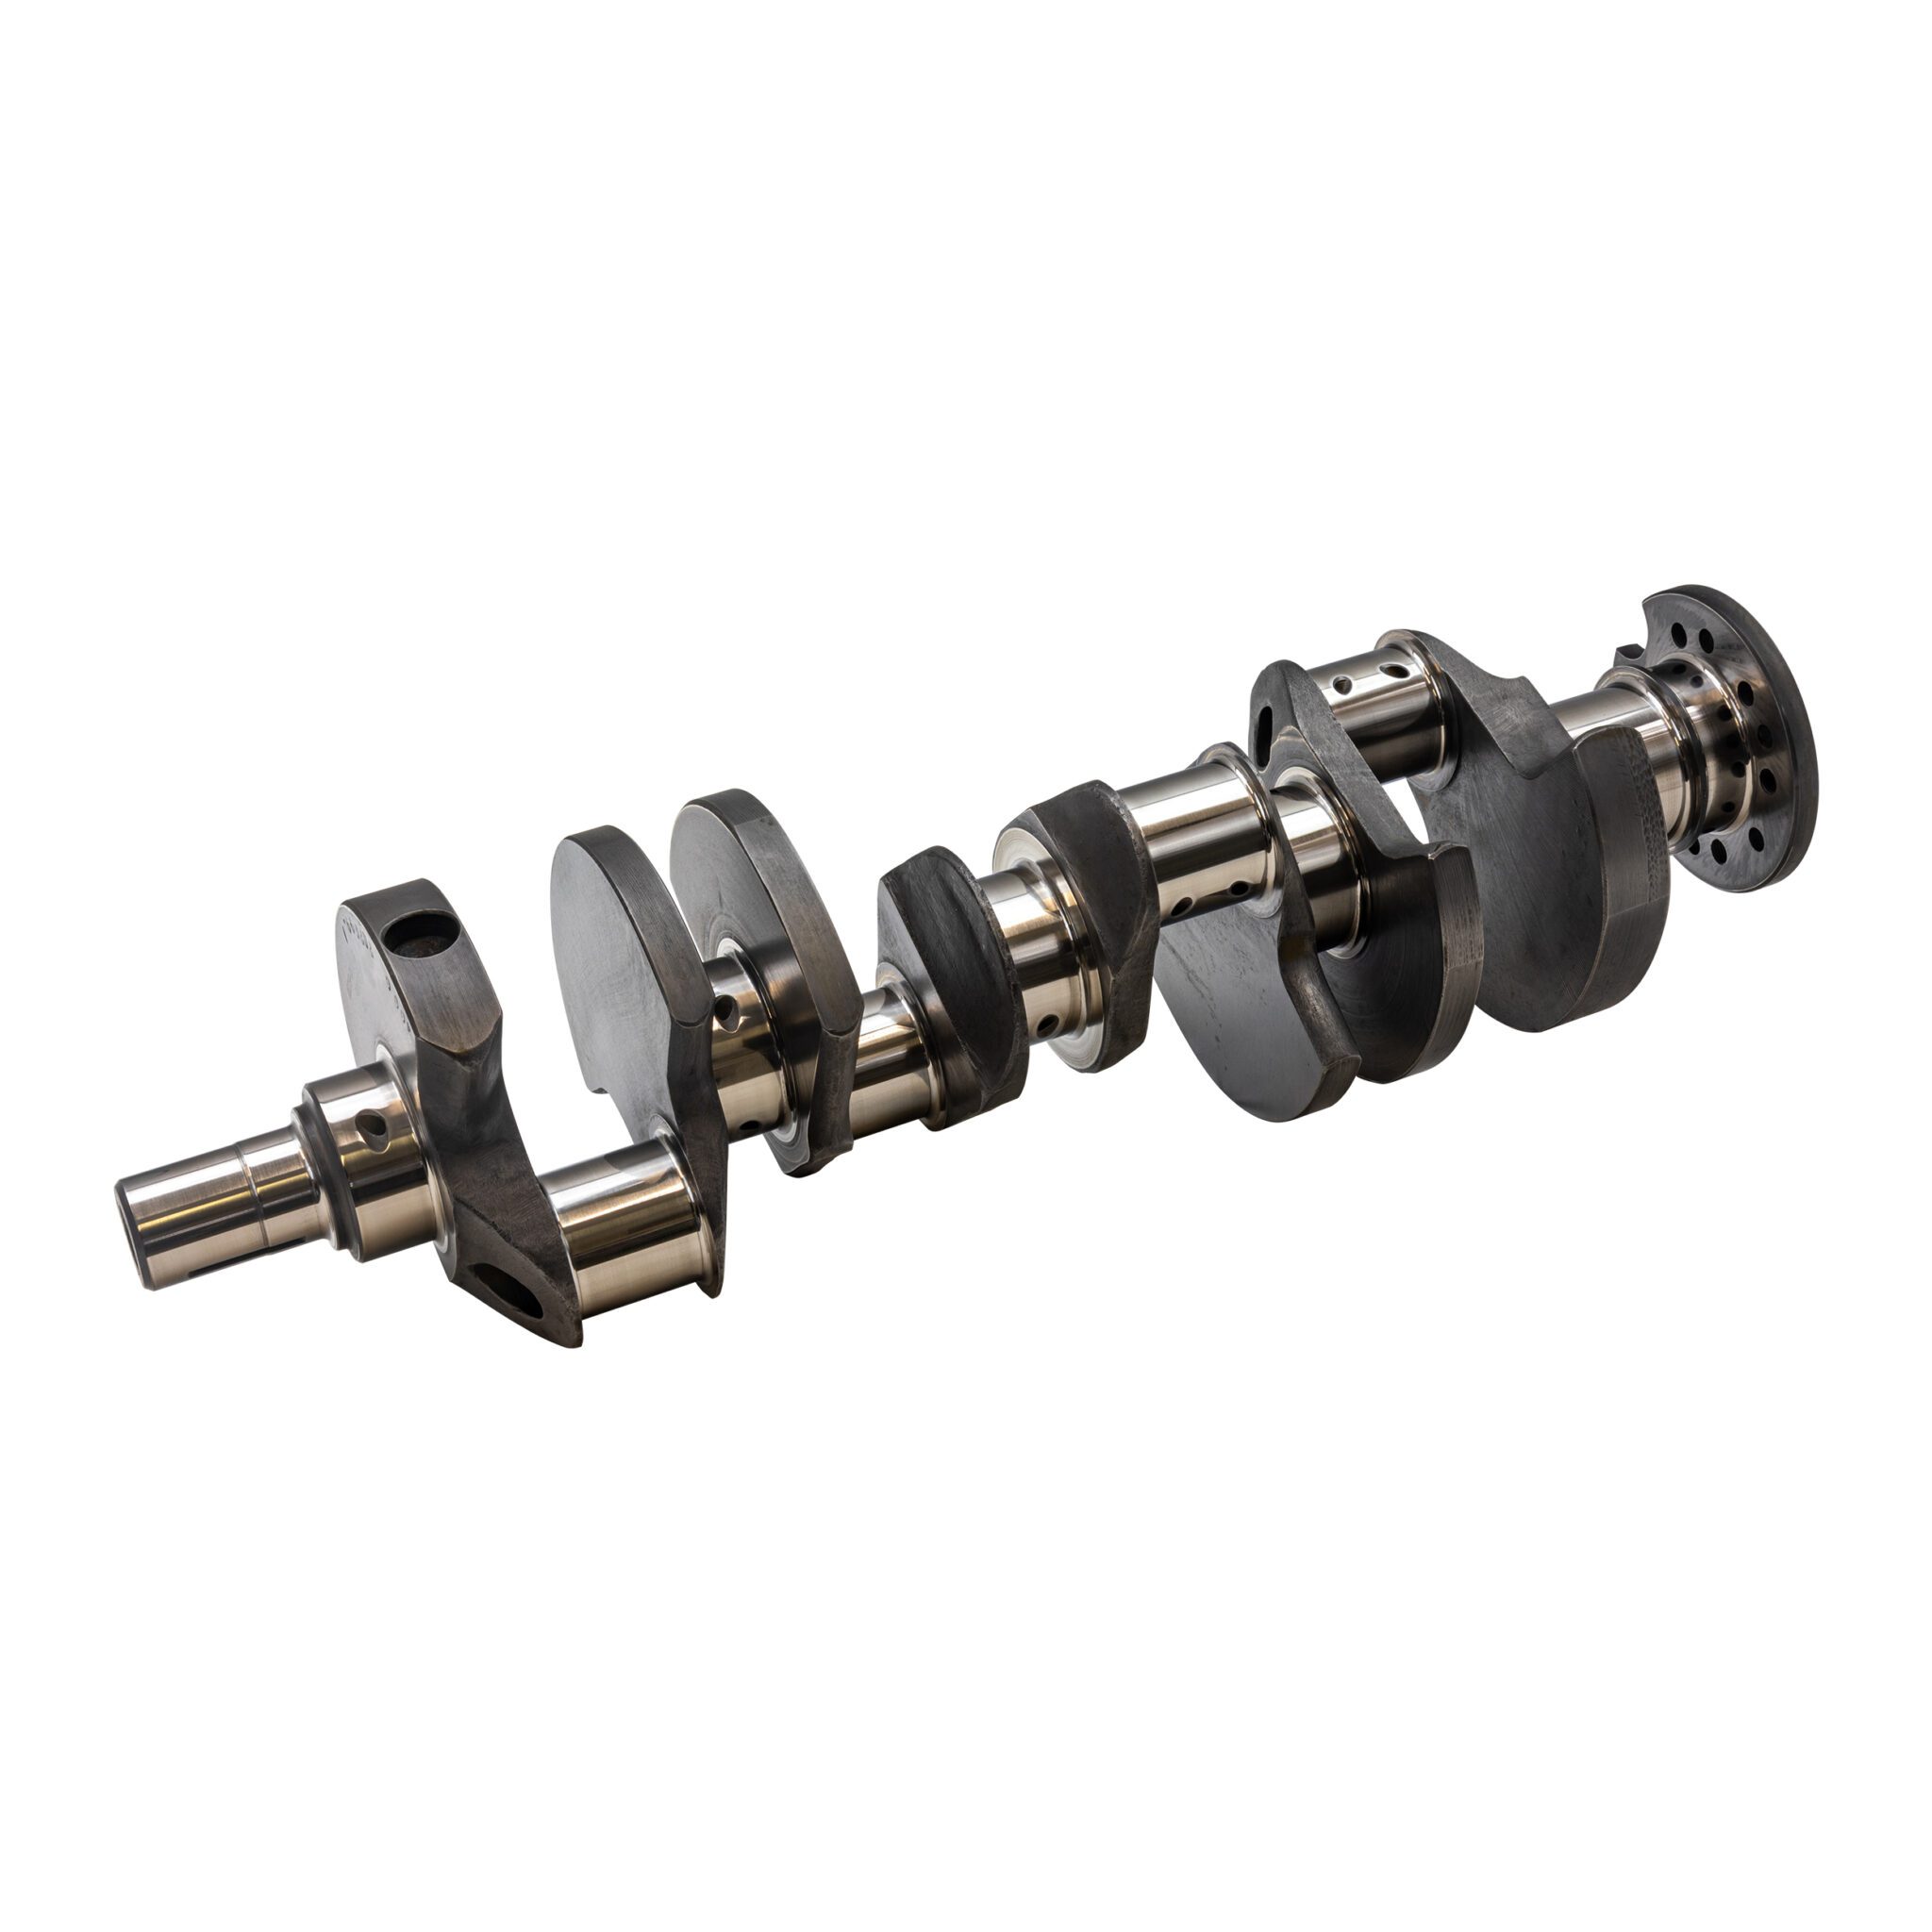 SCAT 9-340-4000-6123 Cast Steel Crankshaft for Small Block Mopar 